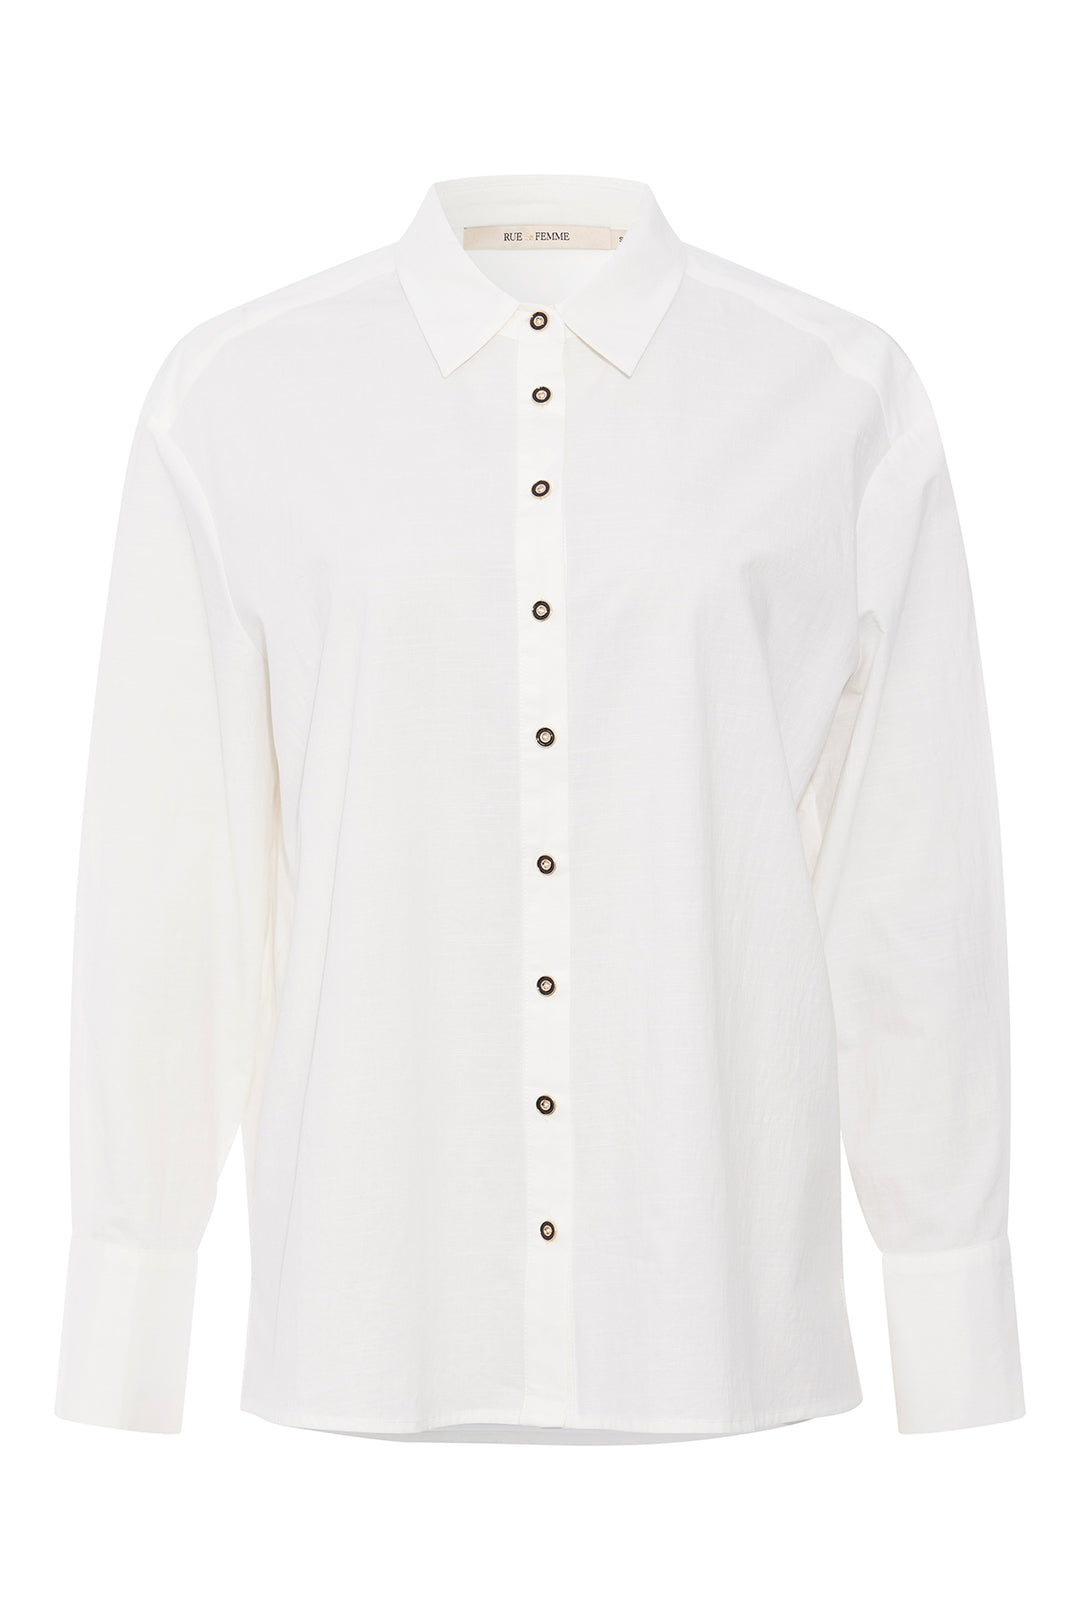 Rue de Femme Harper skjorte SHIRTS 02 Off white